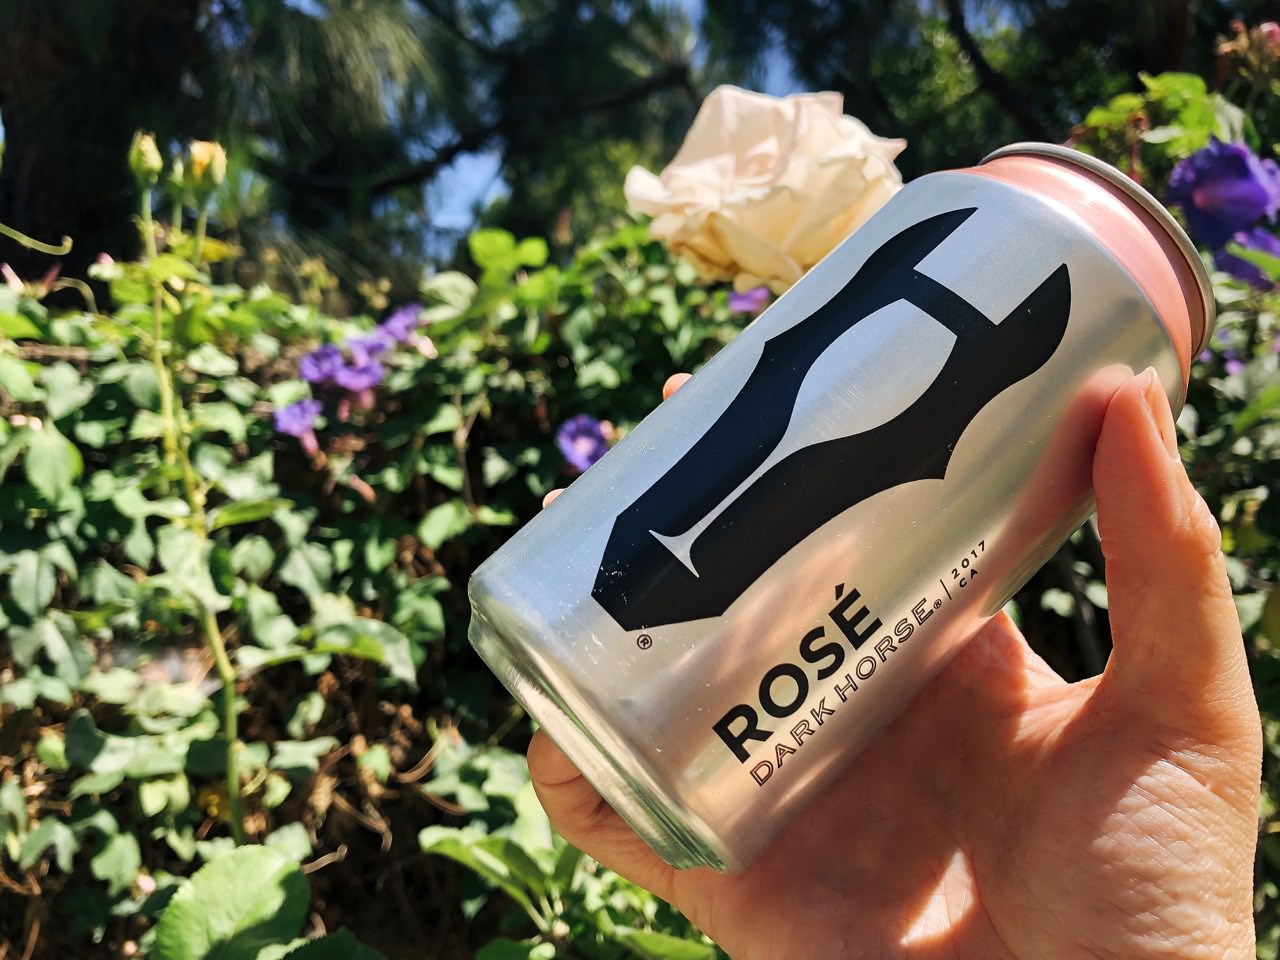 California Dark Horse Rosé 2017 》2017 年加州粉紅酒包裝是鋁罐?!?